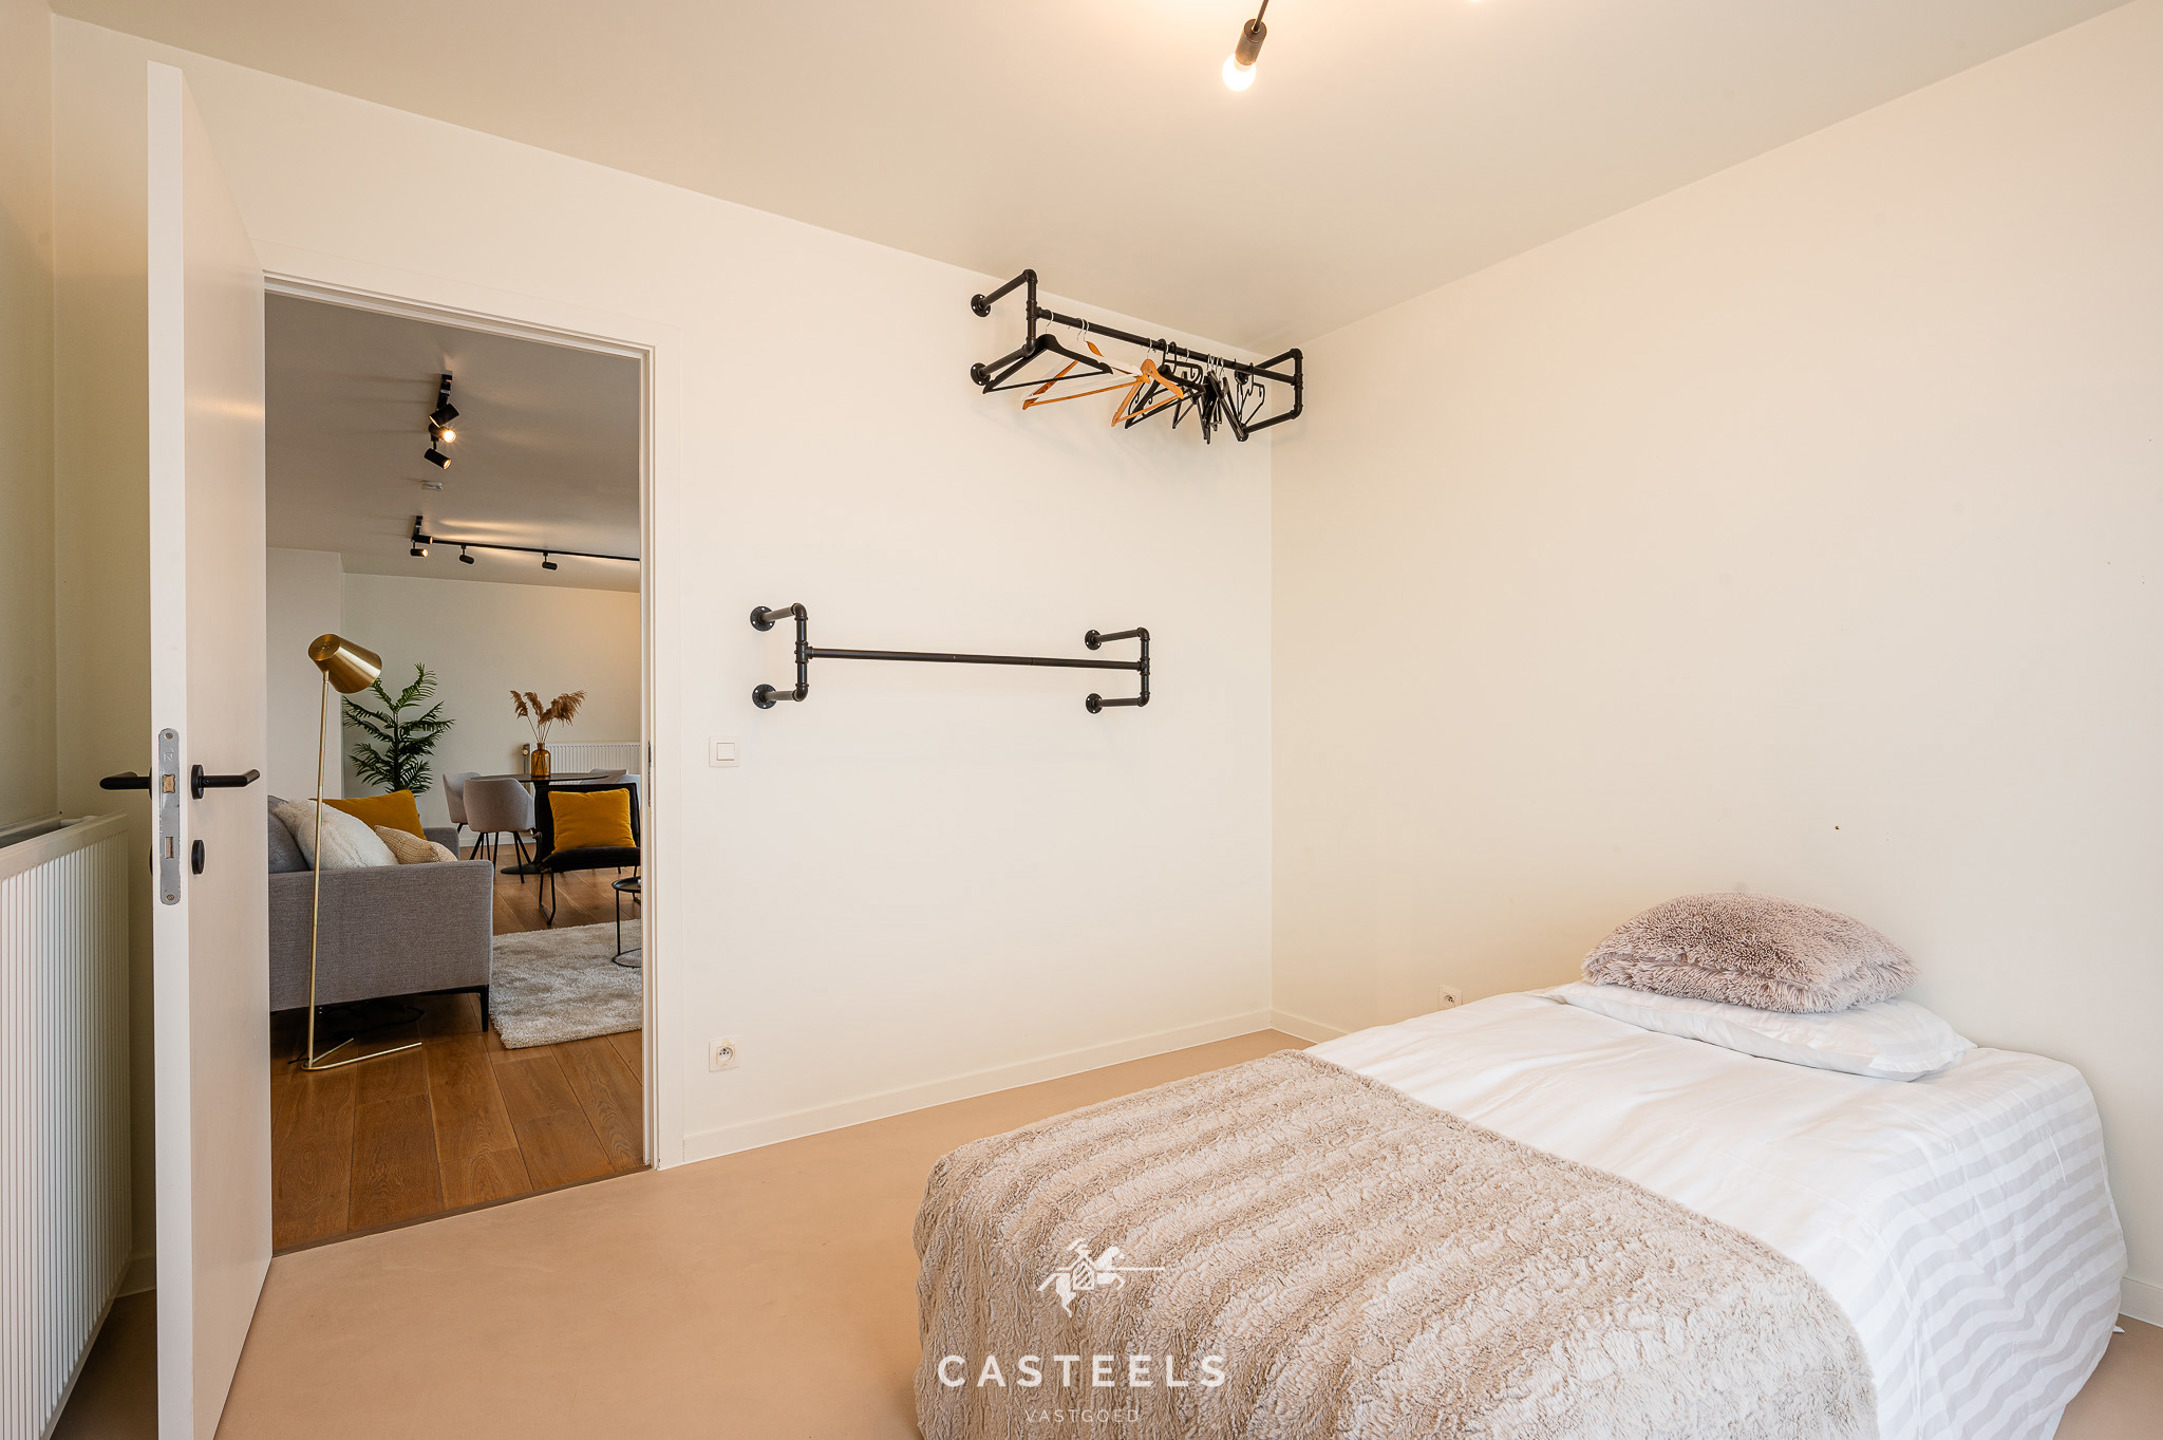 Afbeelding Exclusieve penthouse met ruim terras te koop in Oostakker - Casteels Vastgoed